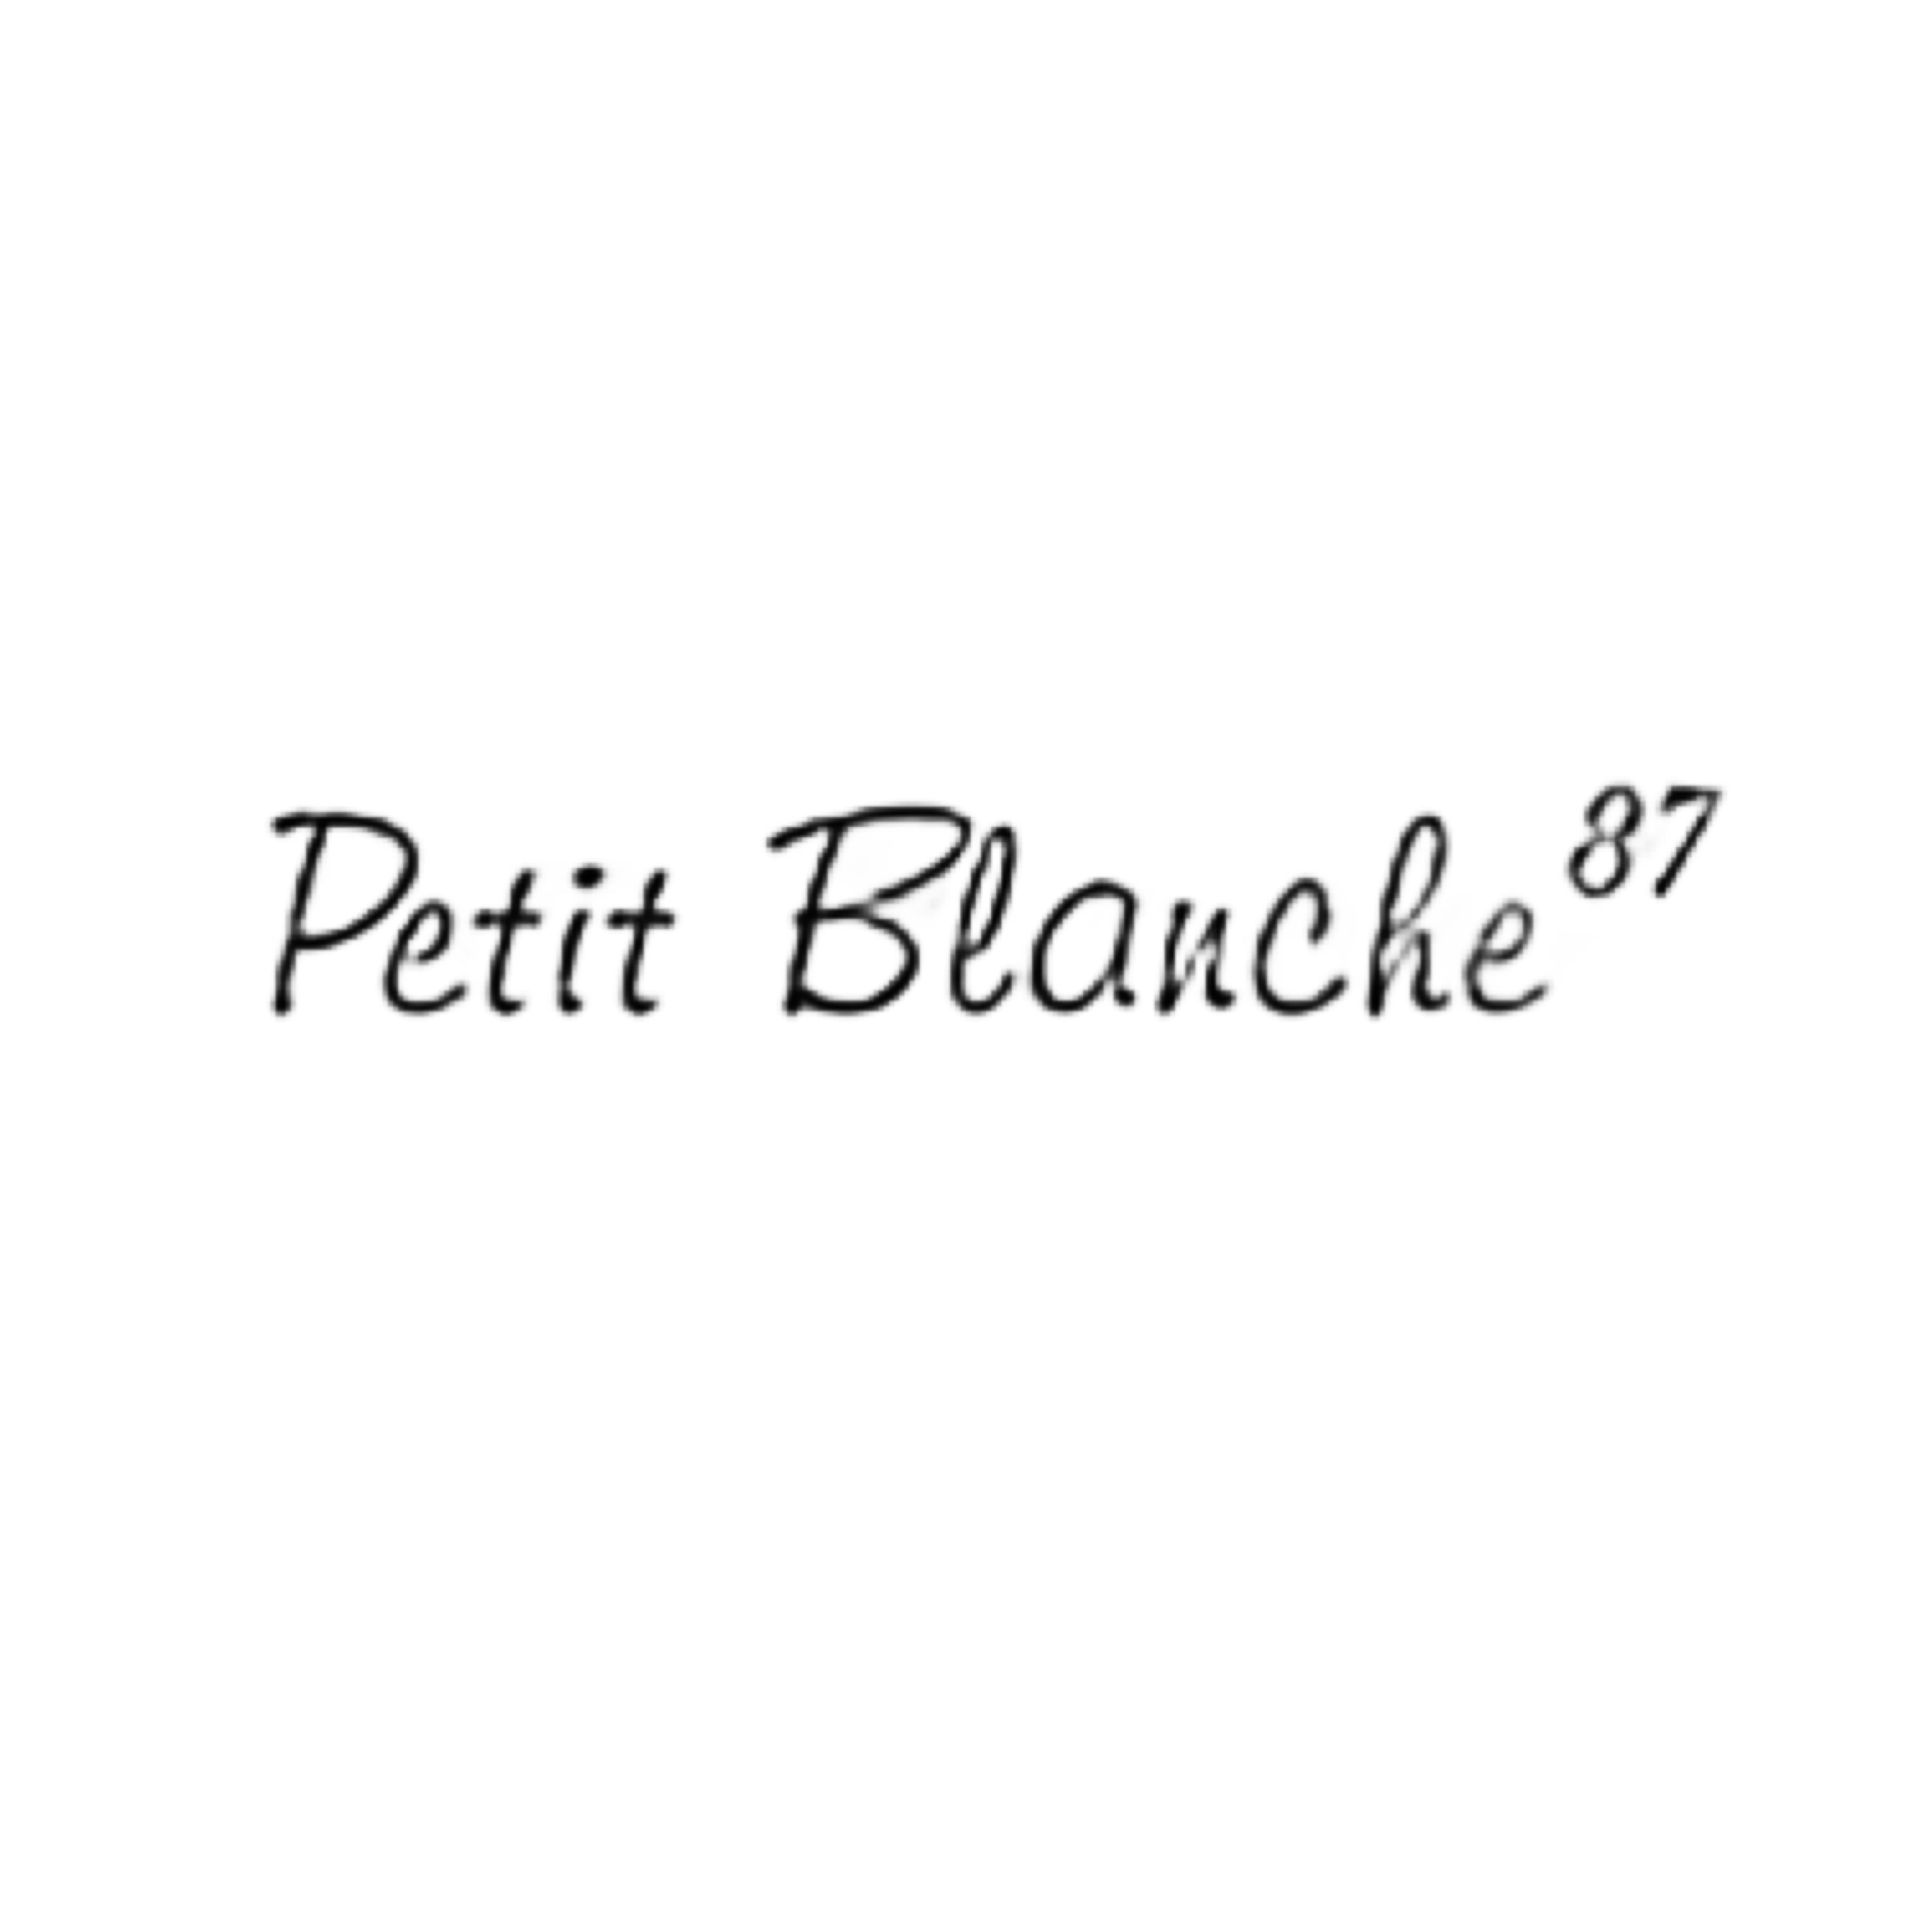 Petit Blanche87